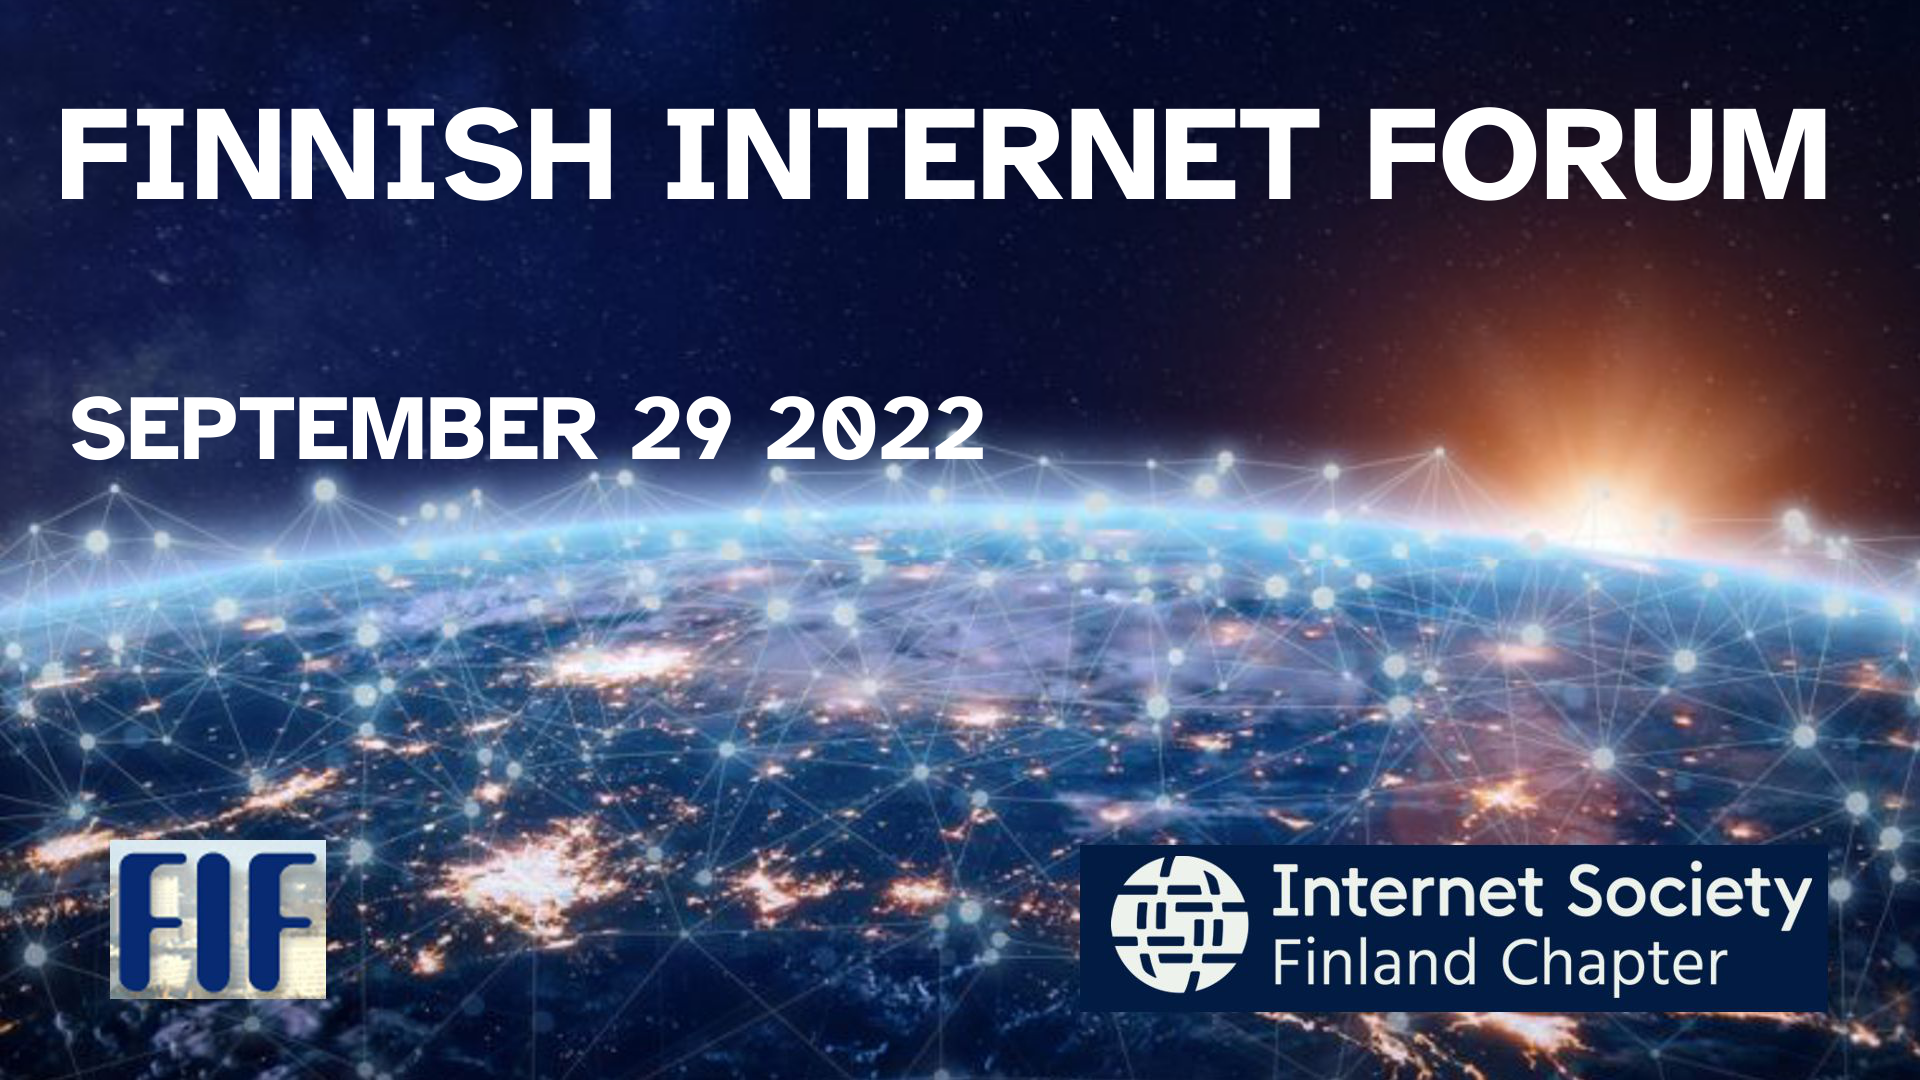 WEBCAST SEP 29 Finnish Internet Forum 2022